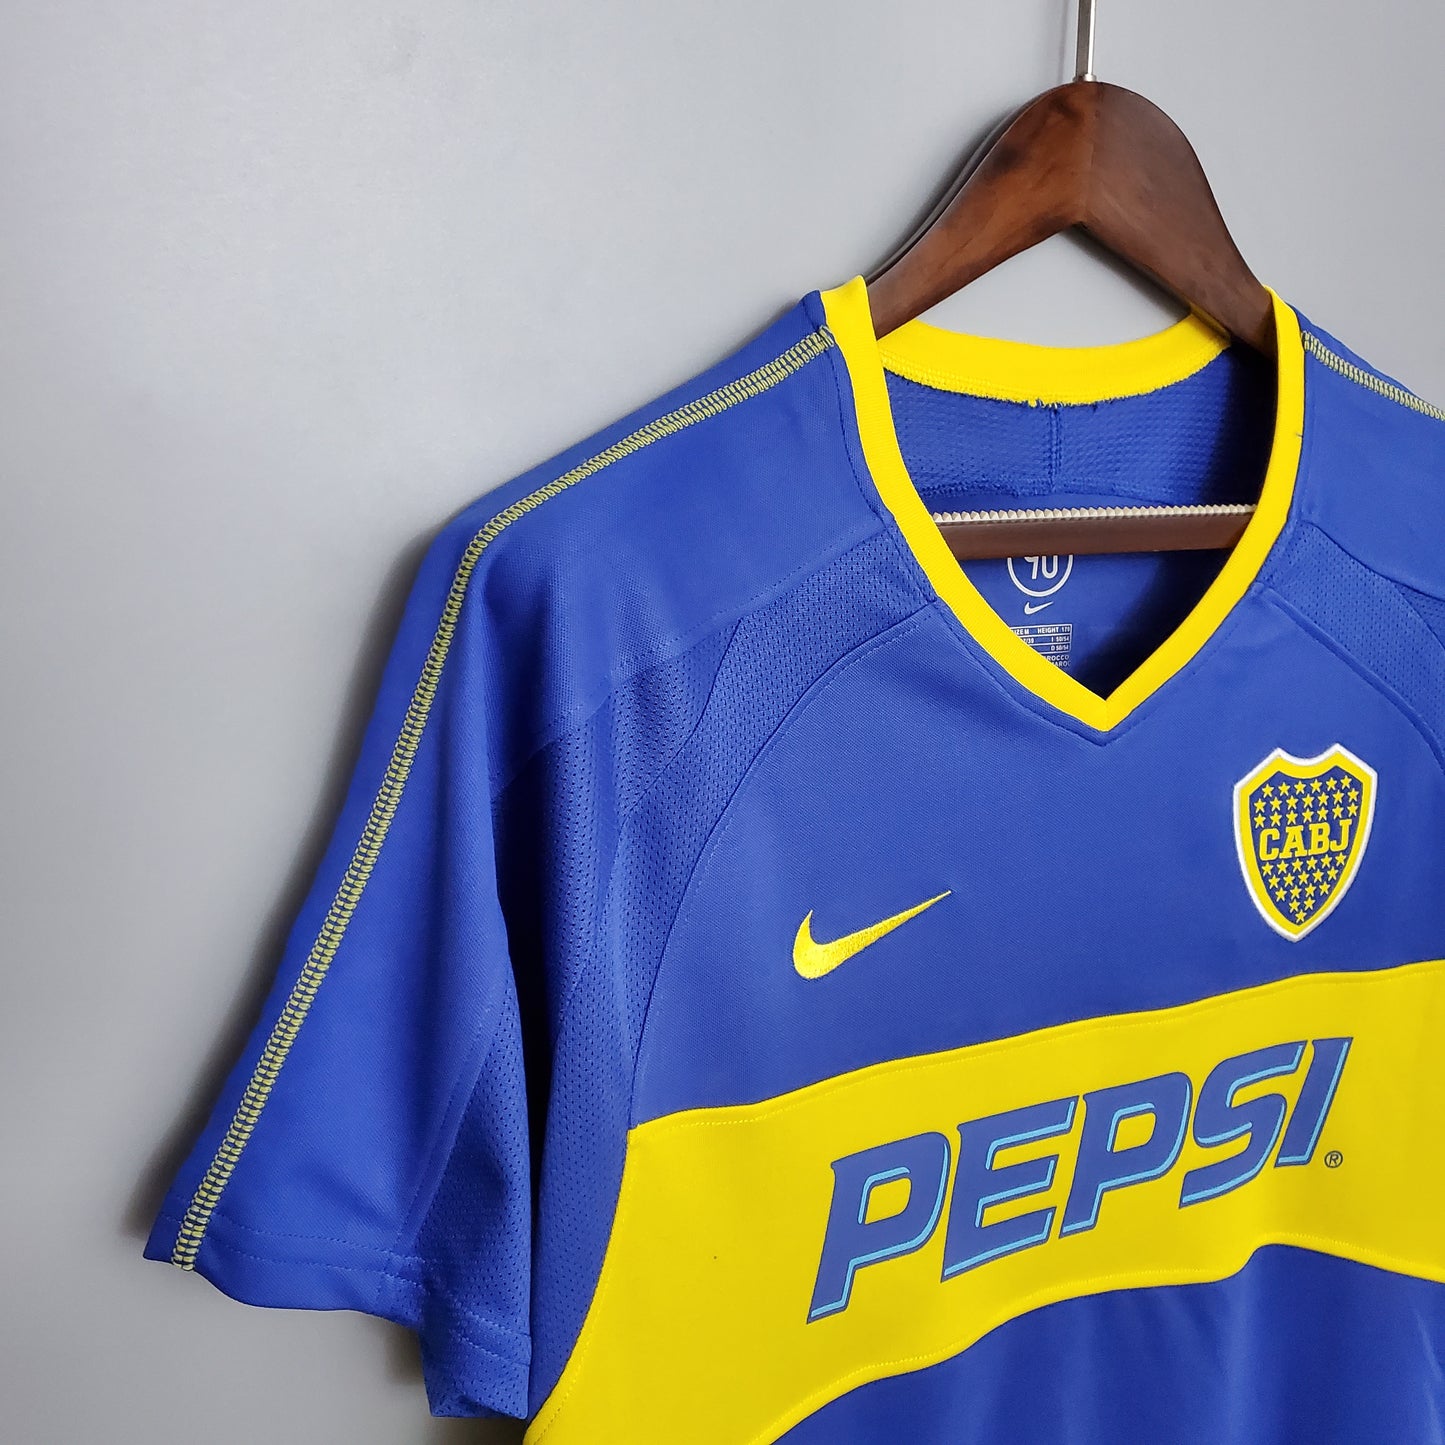 Boca Juniors 2003/04 Home Jersey